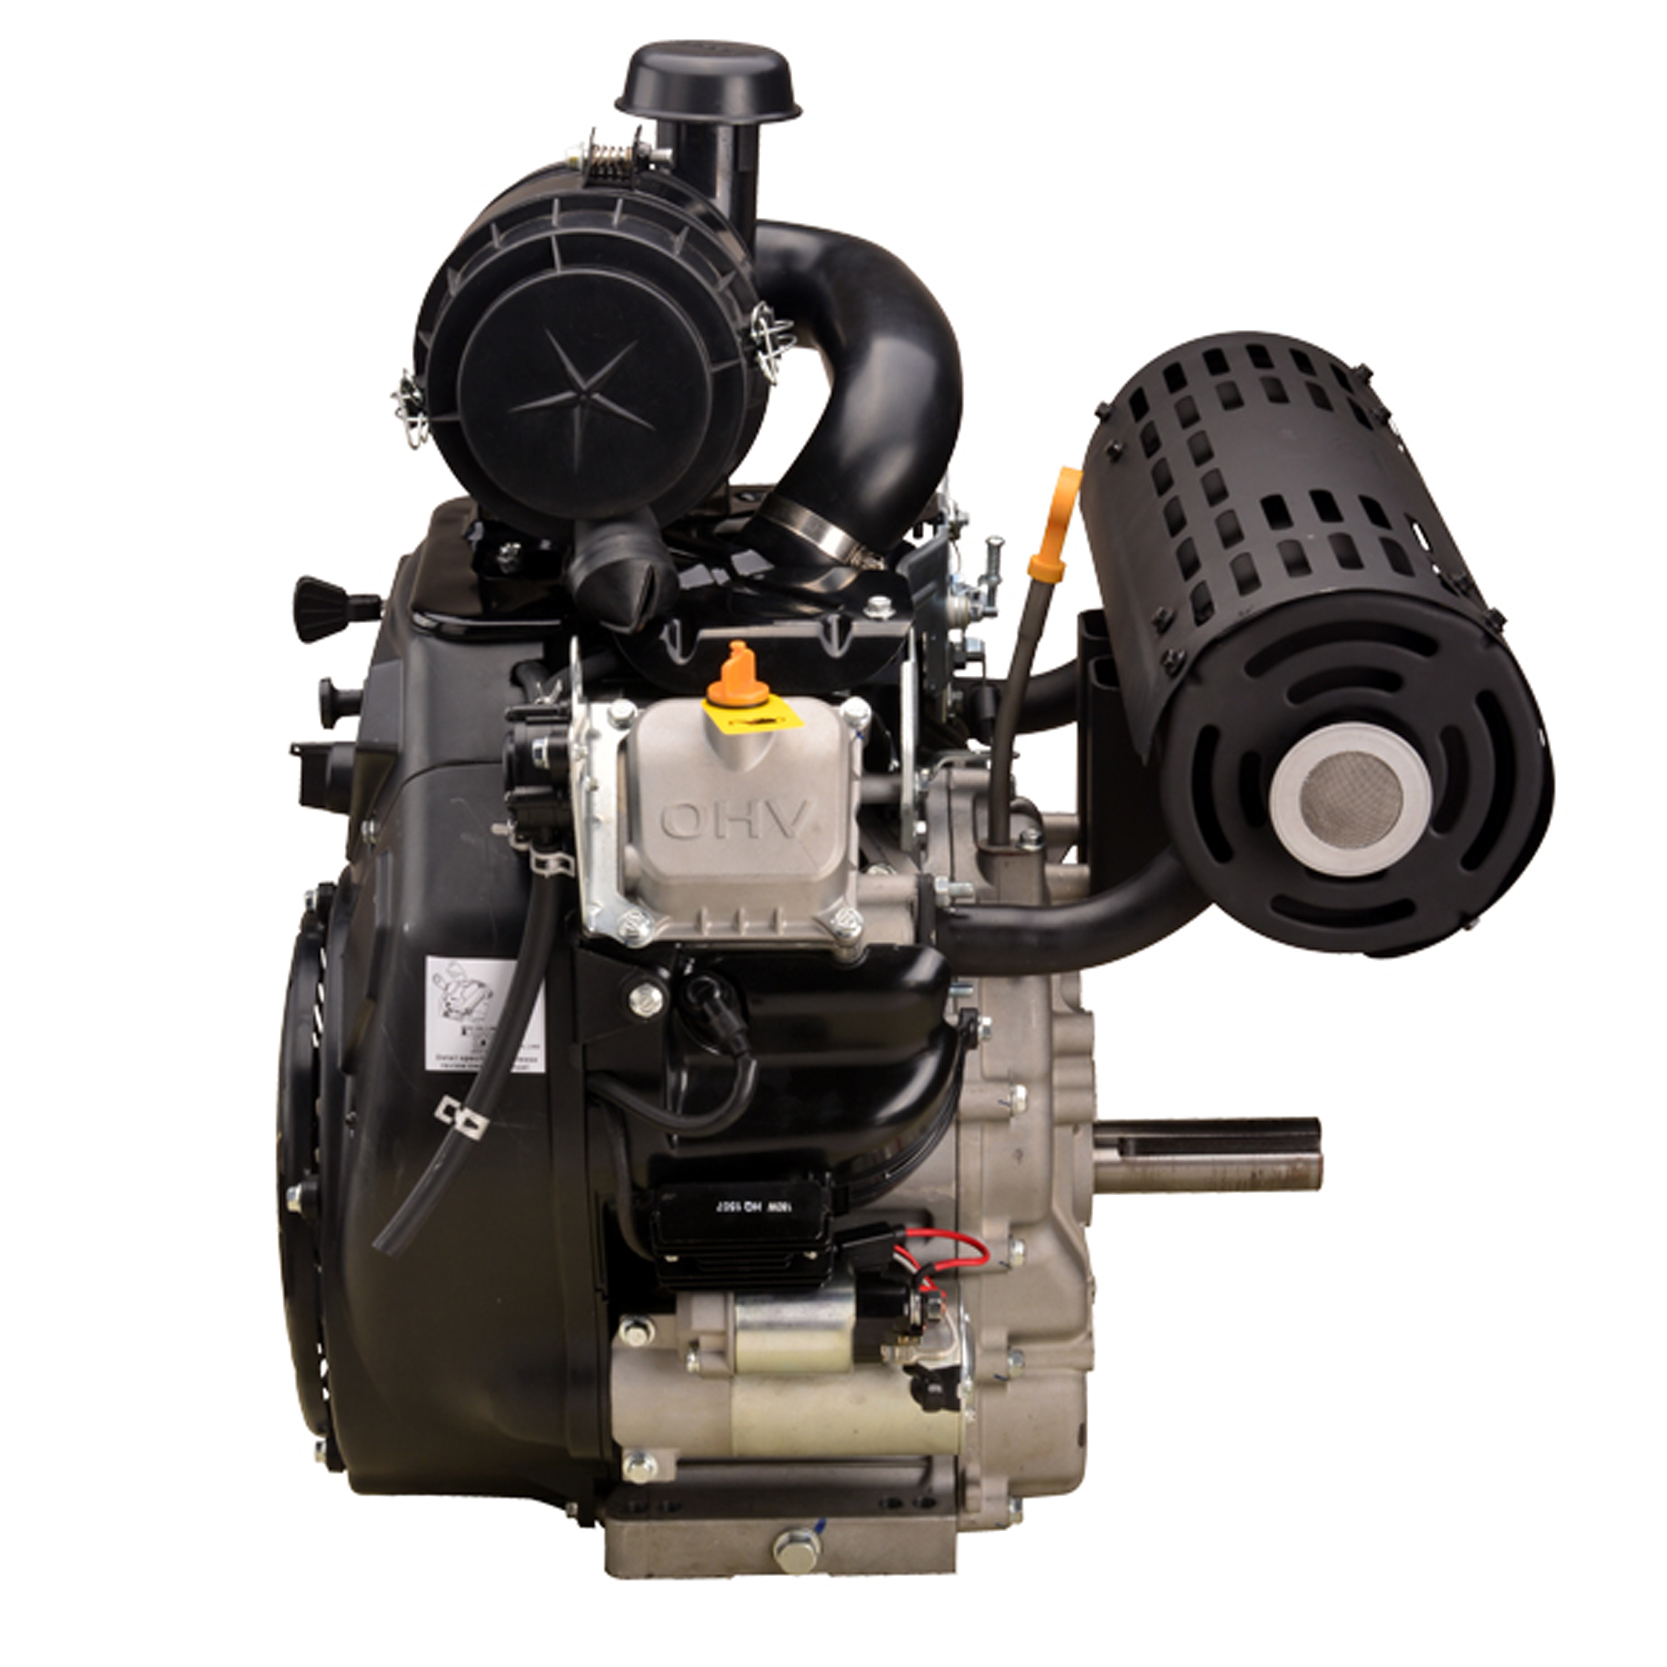 35 PS 999 CC V-Zweizylinder-Benzinmotor EPA/EURO-V mit HD-Luftfilter